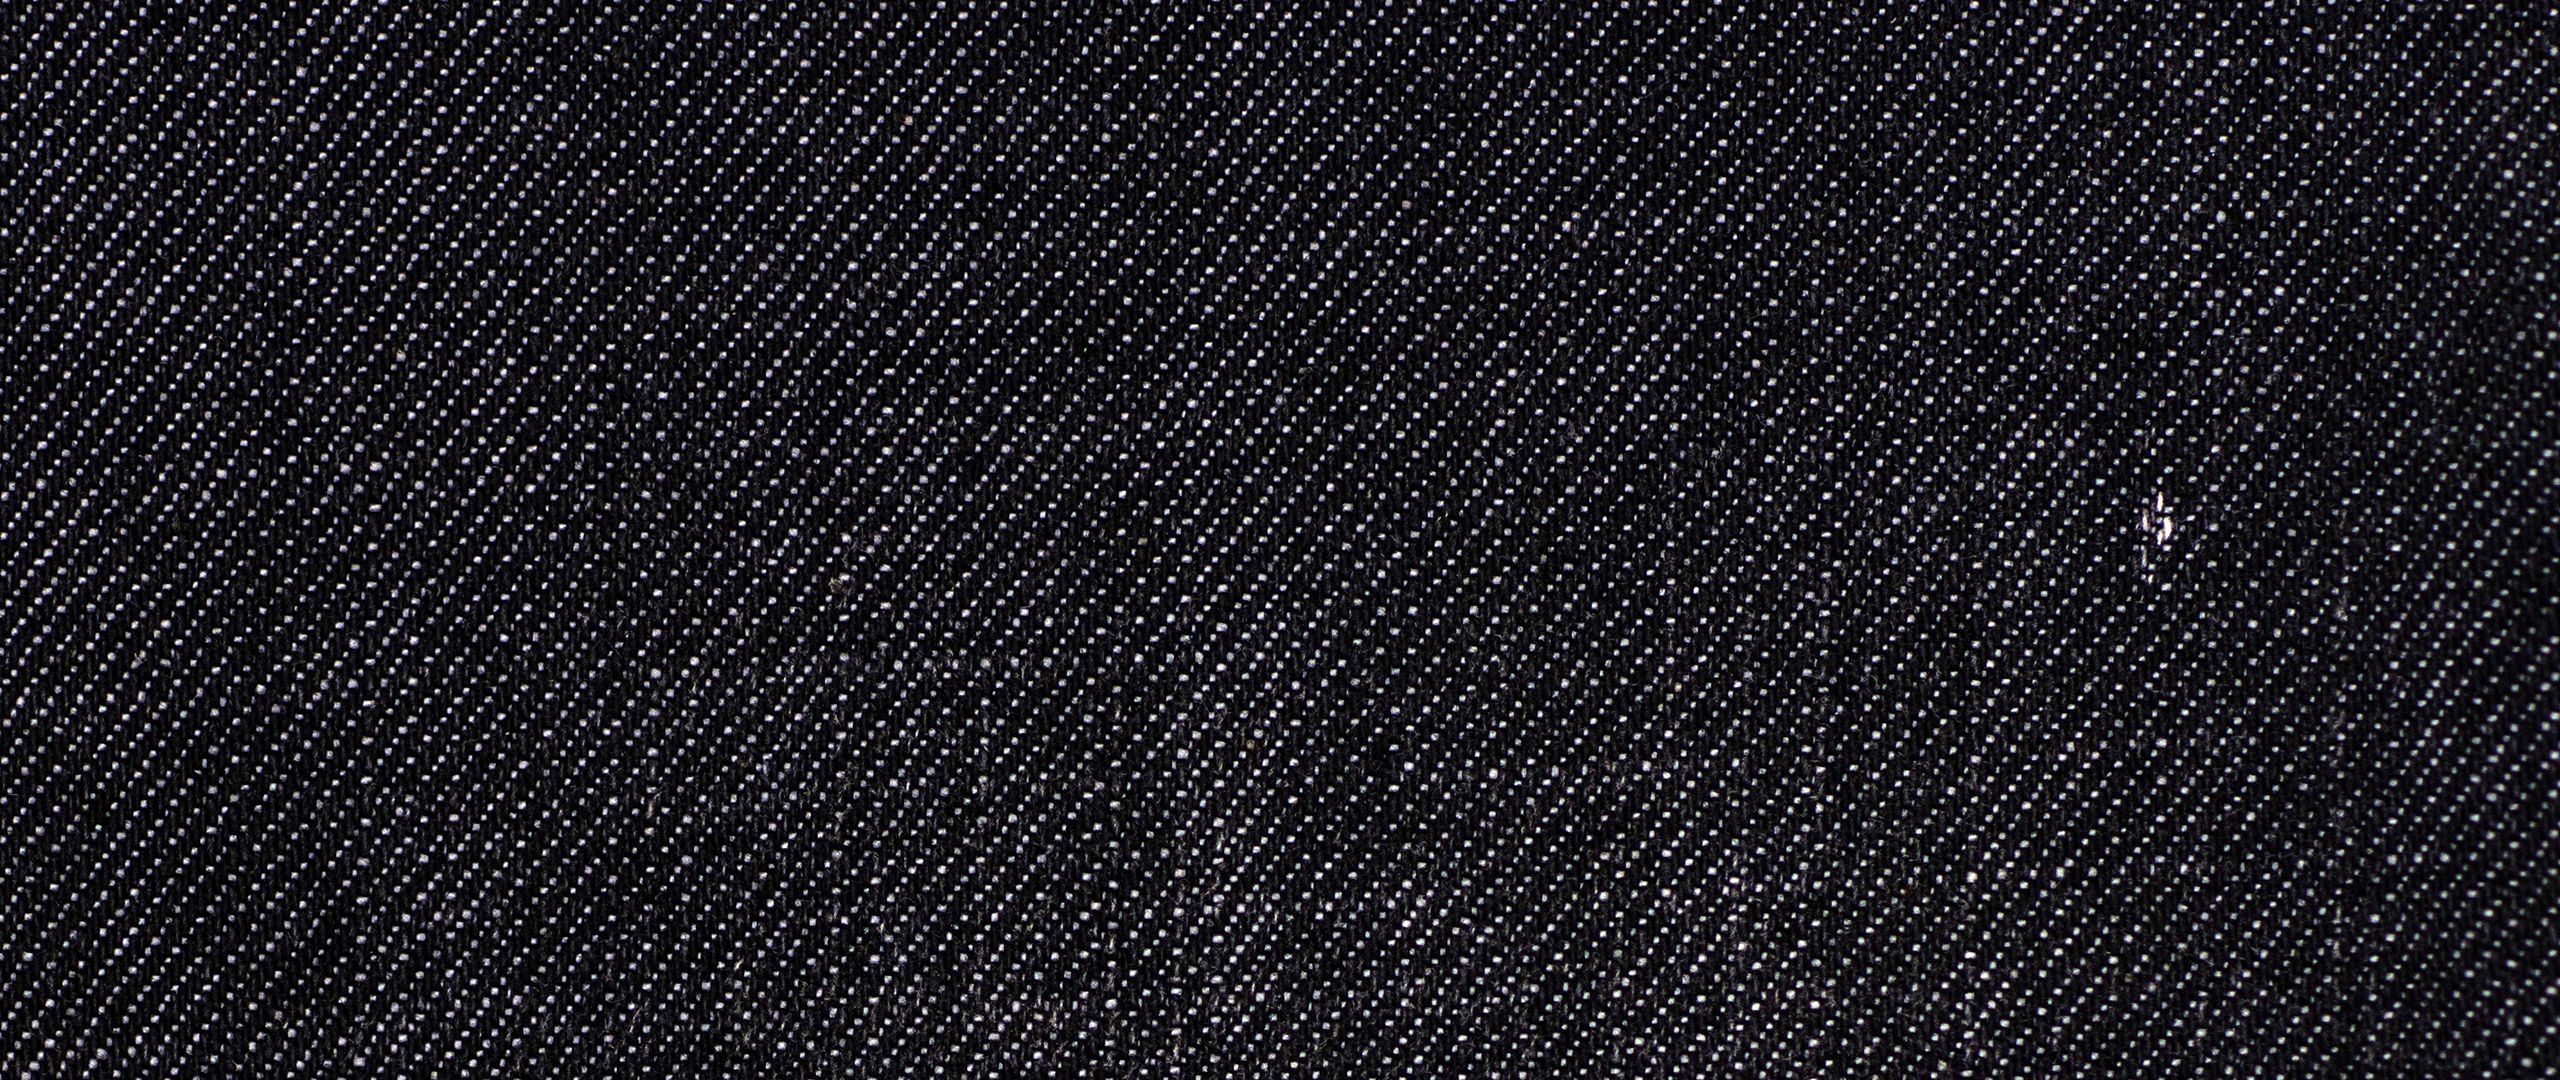 Download wallpaper 2560x1080 fabric, jeans, texture, dark dual wide ...